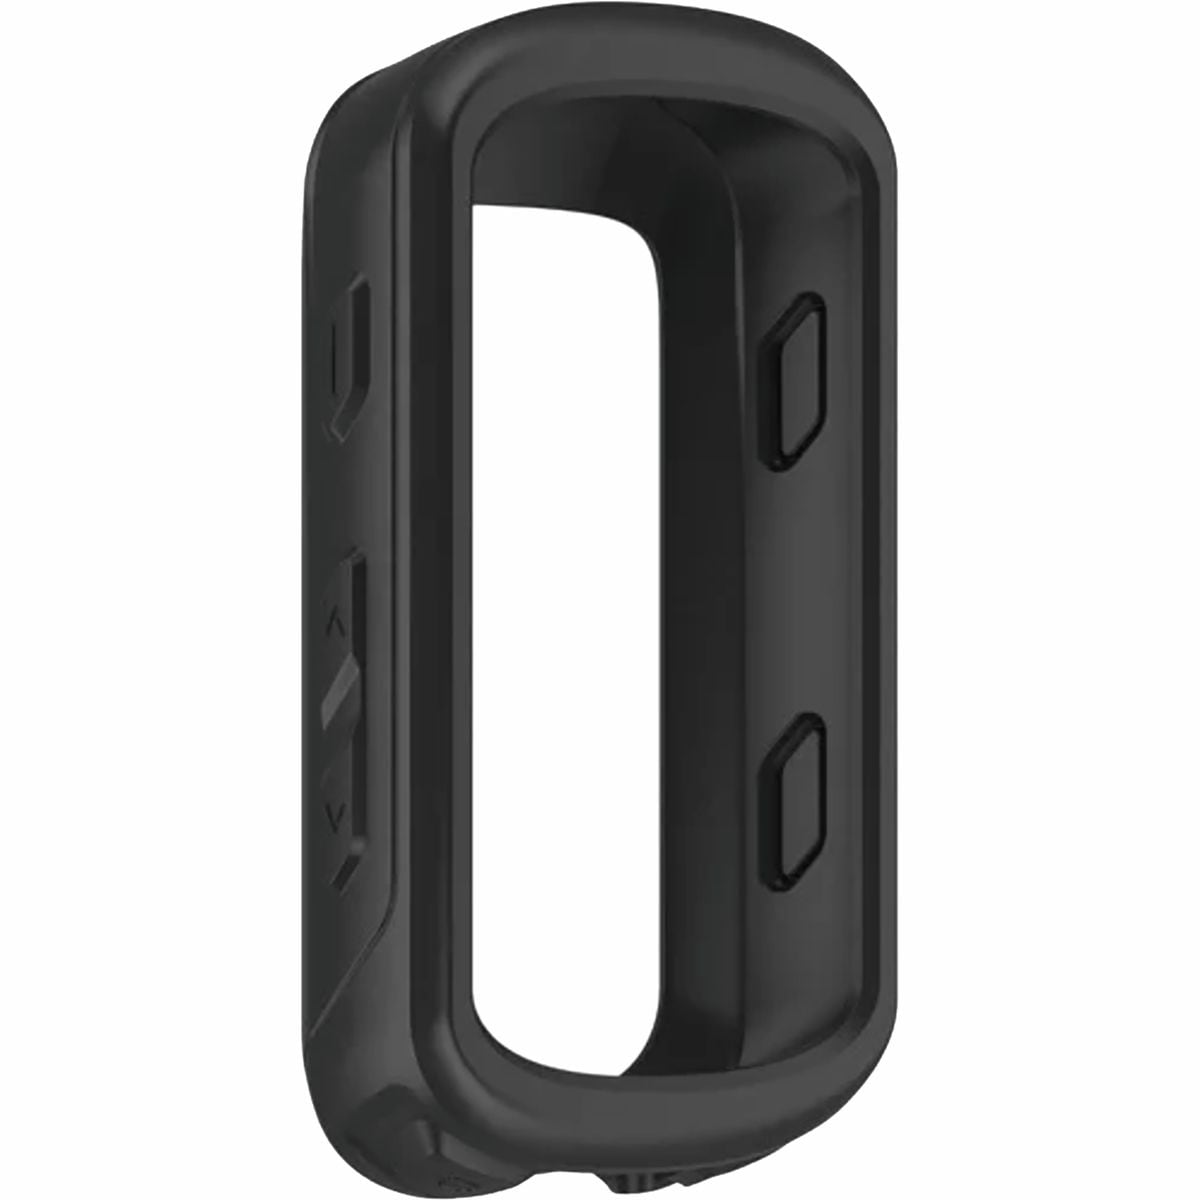 Soft Silicone Case Protective Cover Shell for Garmin Edge 530 GPS Bike Computer 